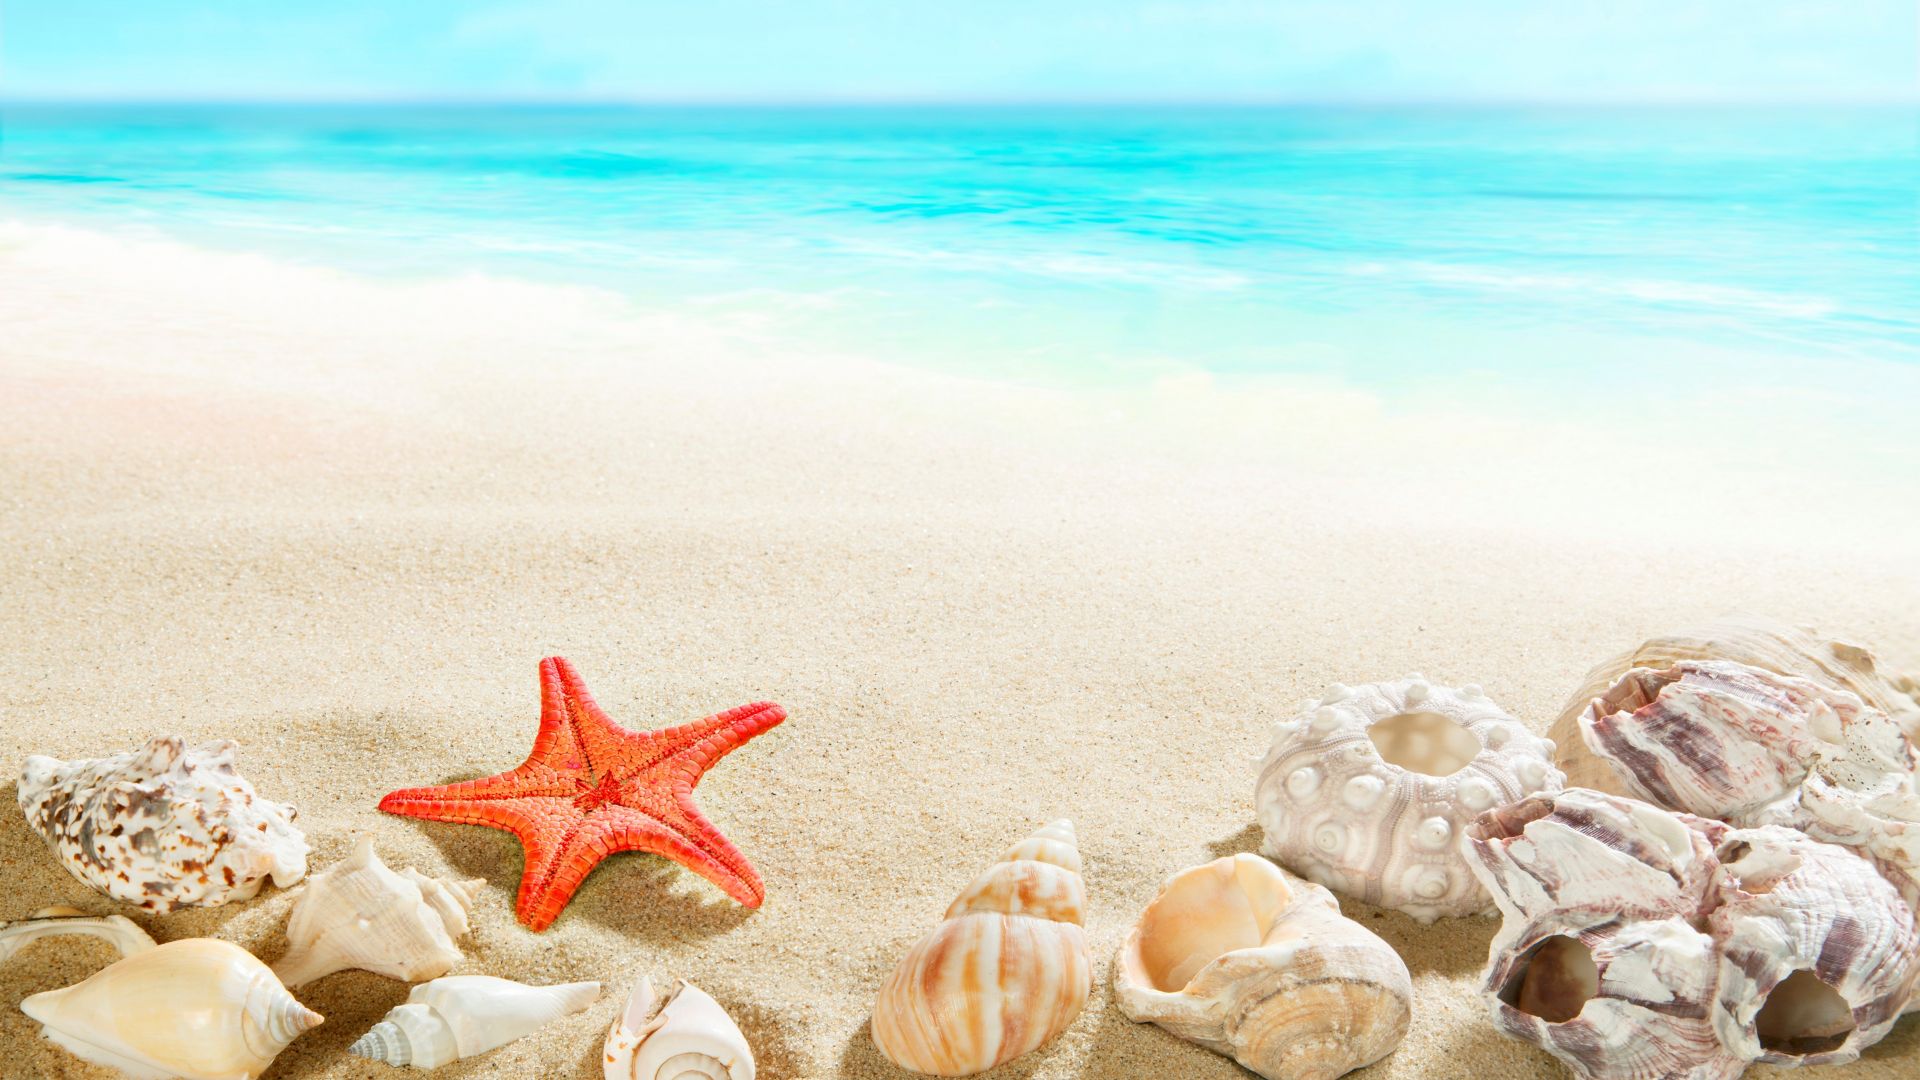 Starfish in Ocean Free HD Wallpaper Download  HD Wallpapers